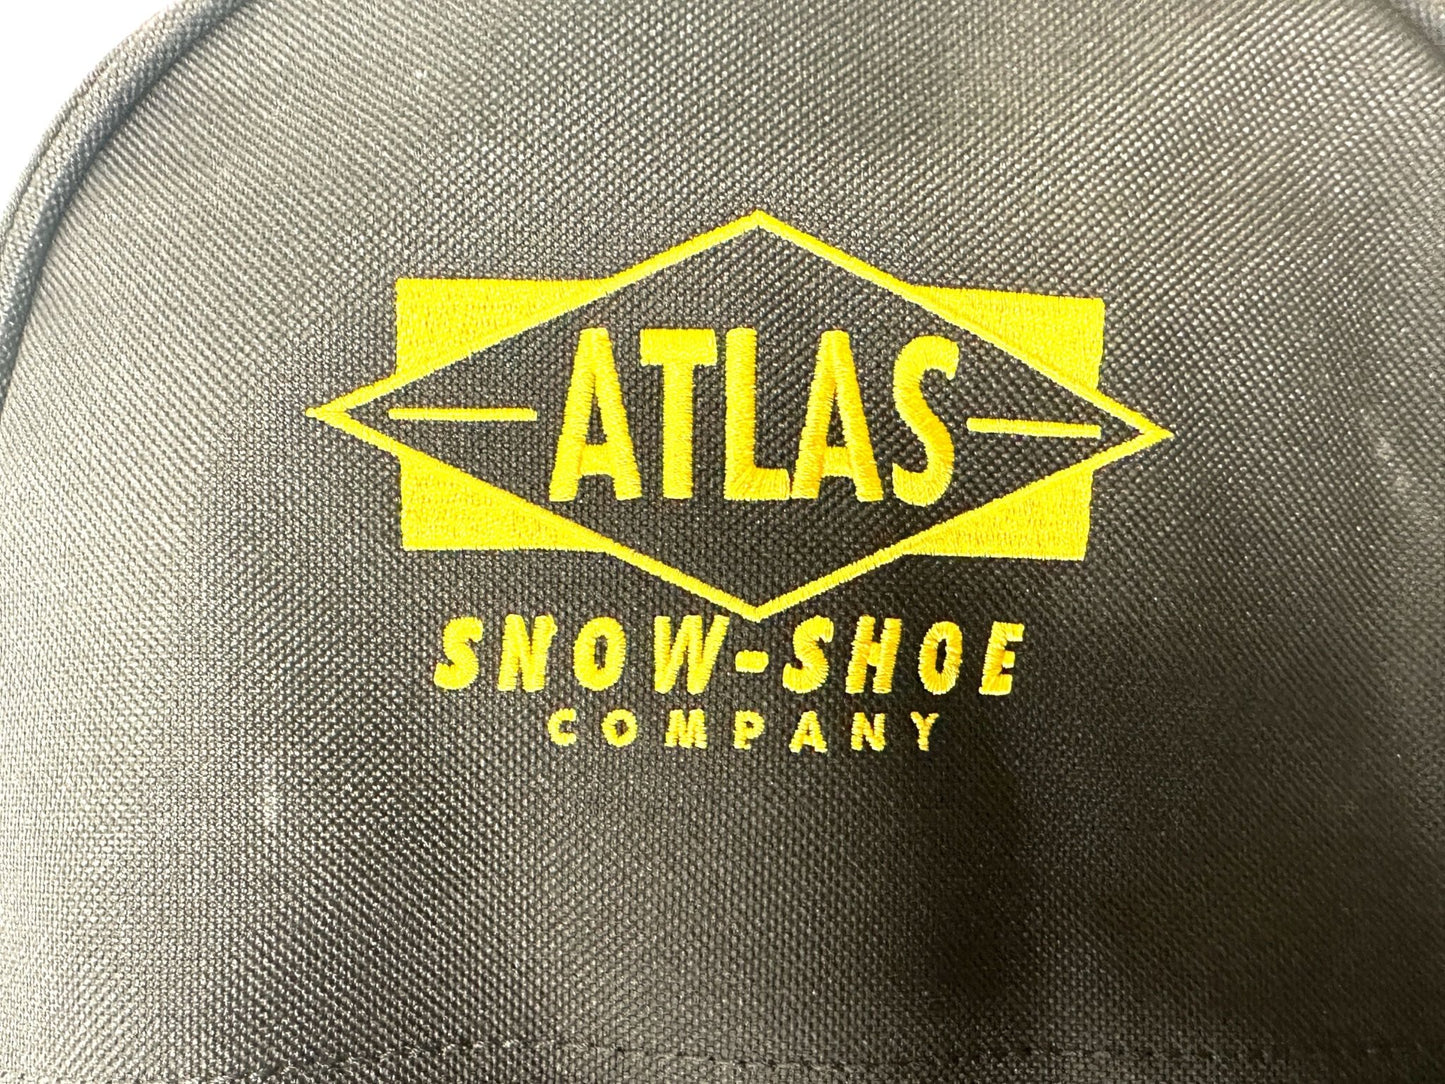 ATLAS HELIUM-TRAIL 30" MENS SNOWSHOE KIT TRAIL WALKING SNOW SHOE NEW WITH TAGS - Random Bike Parts